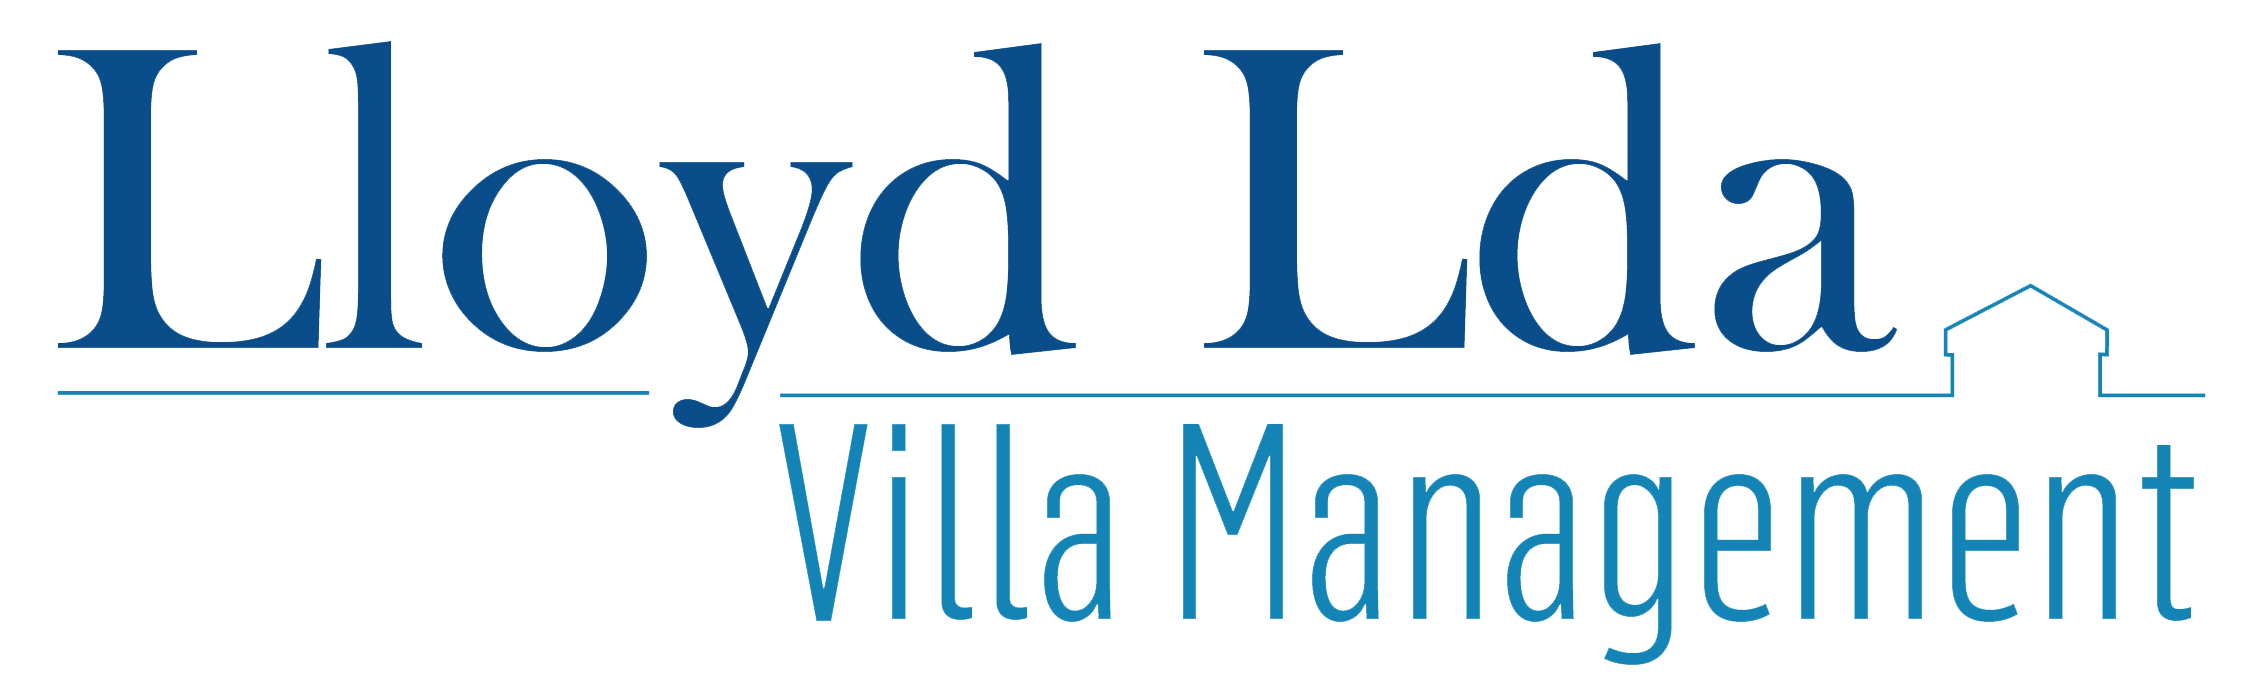 Lloyd Lda Villa Management logo